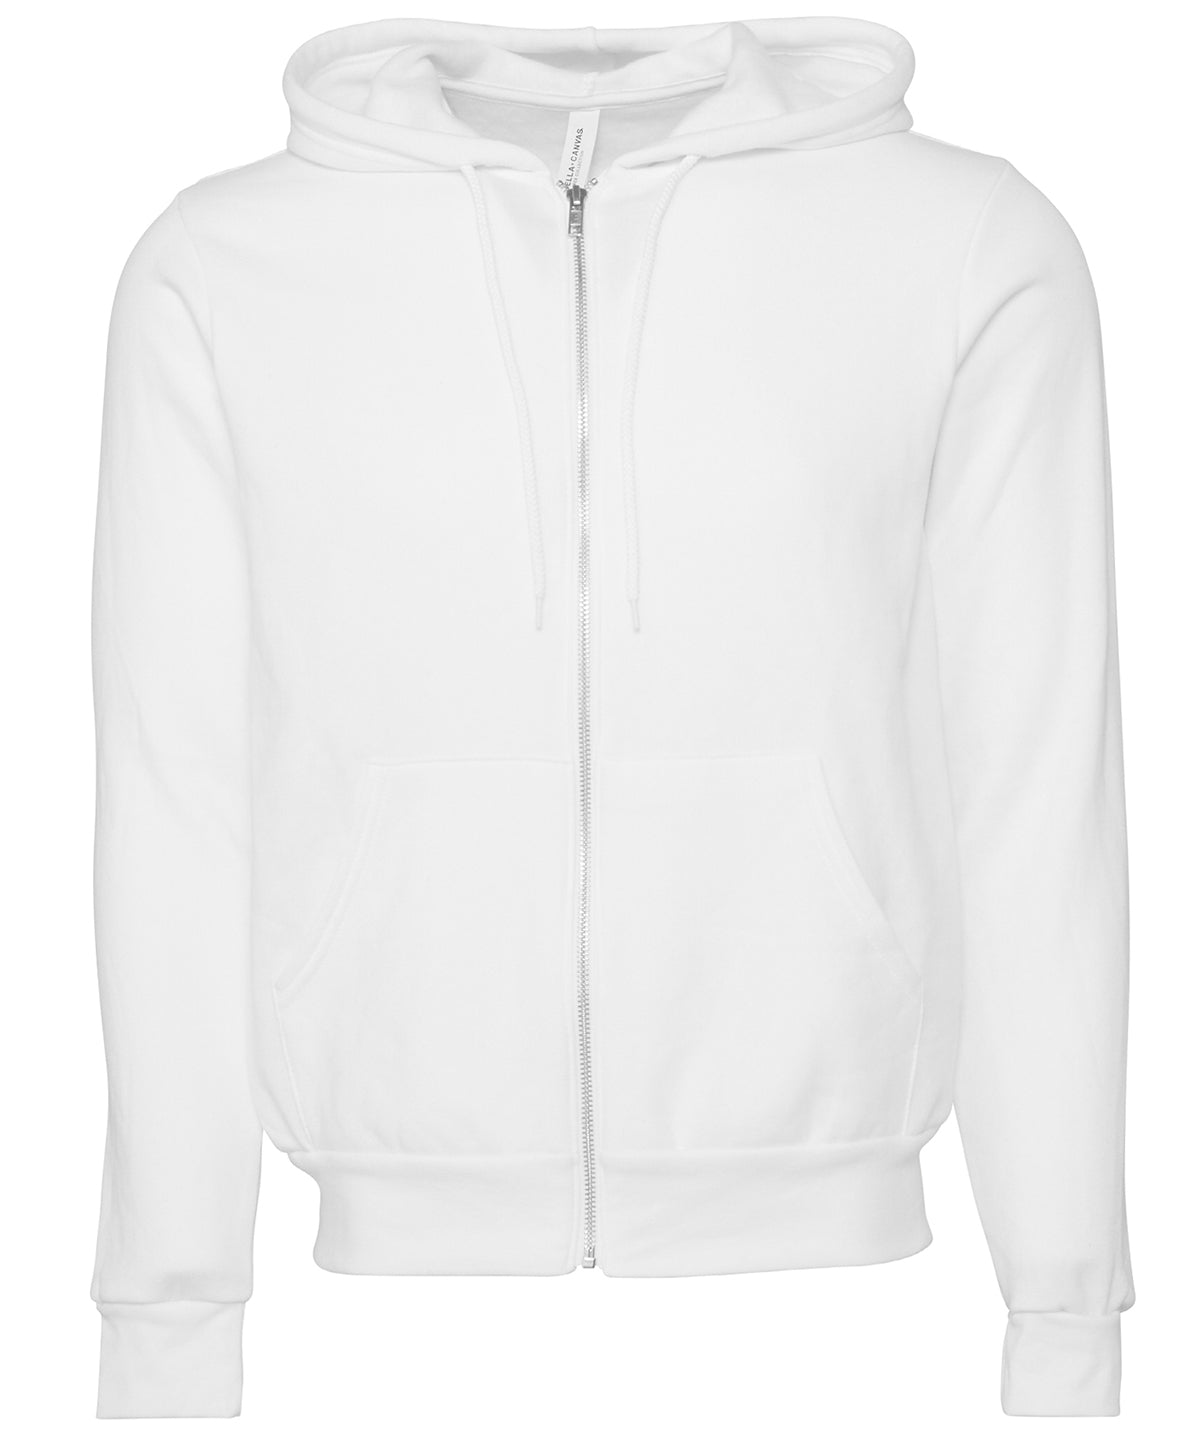 Personalised Hoodies - Light Pink Bella Canvas Unisex polycotton fleece full-zip hoodie